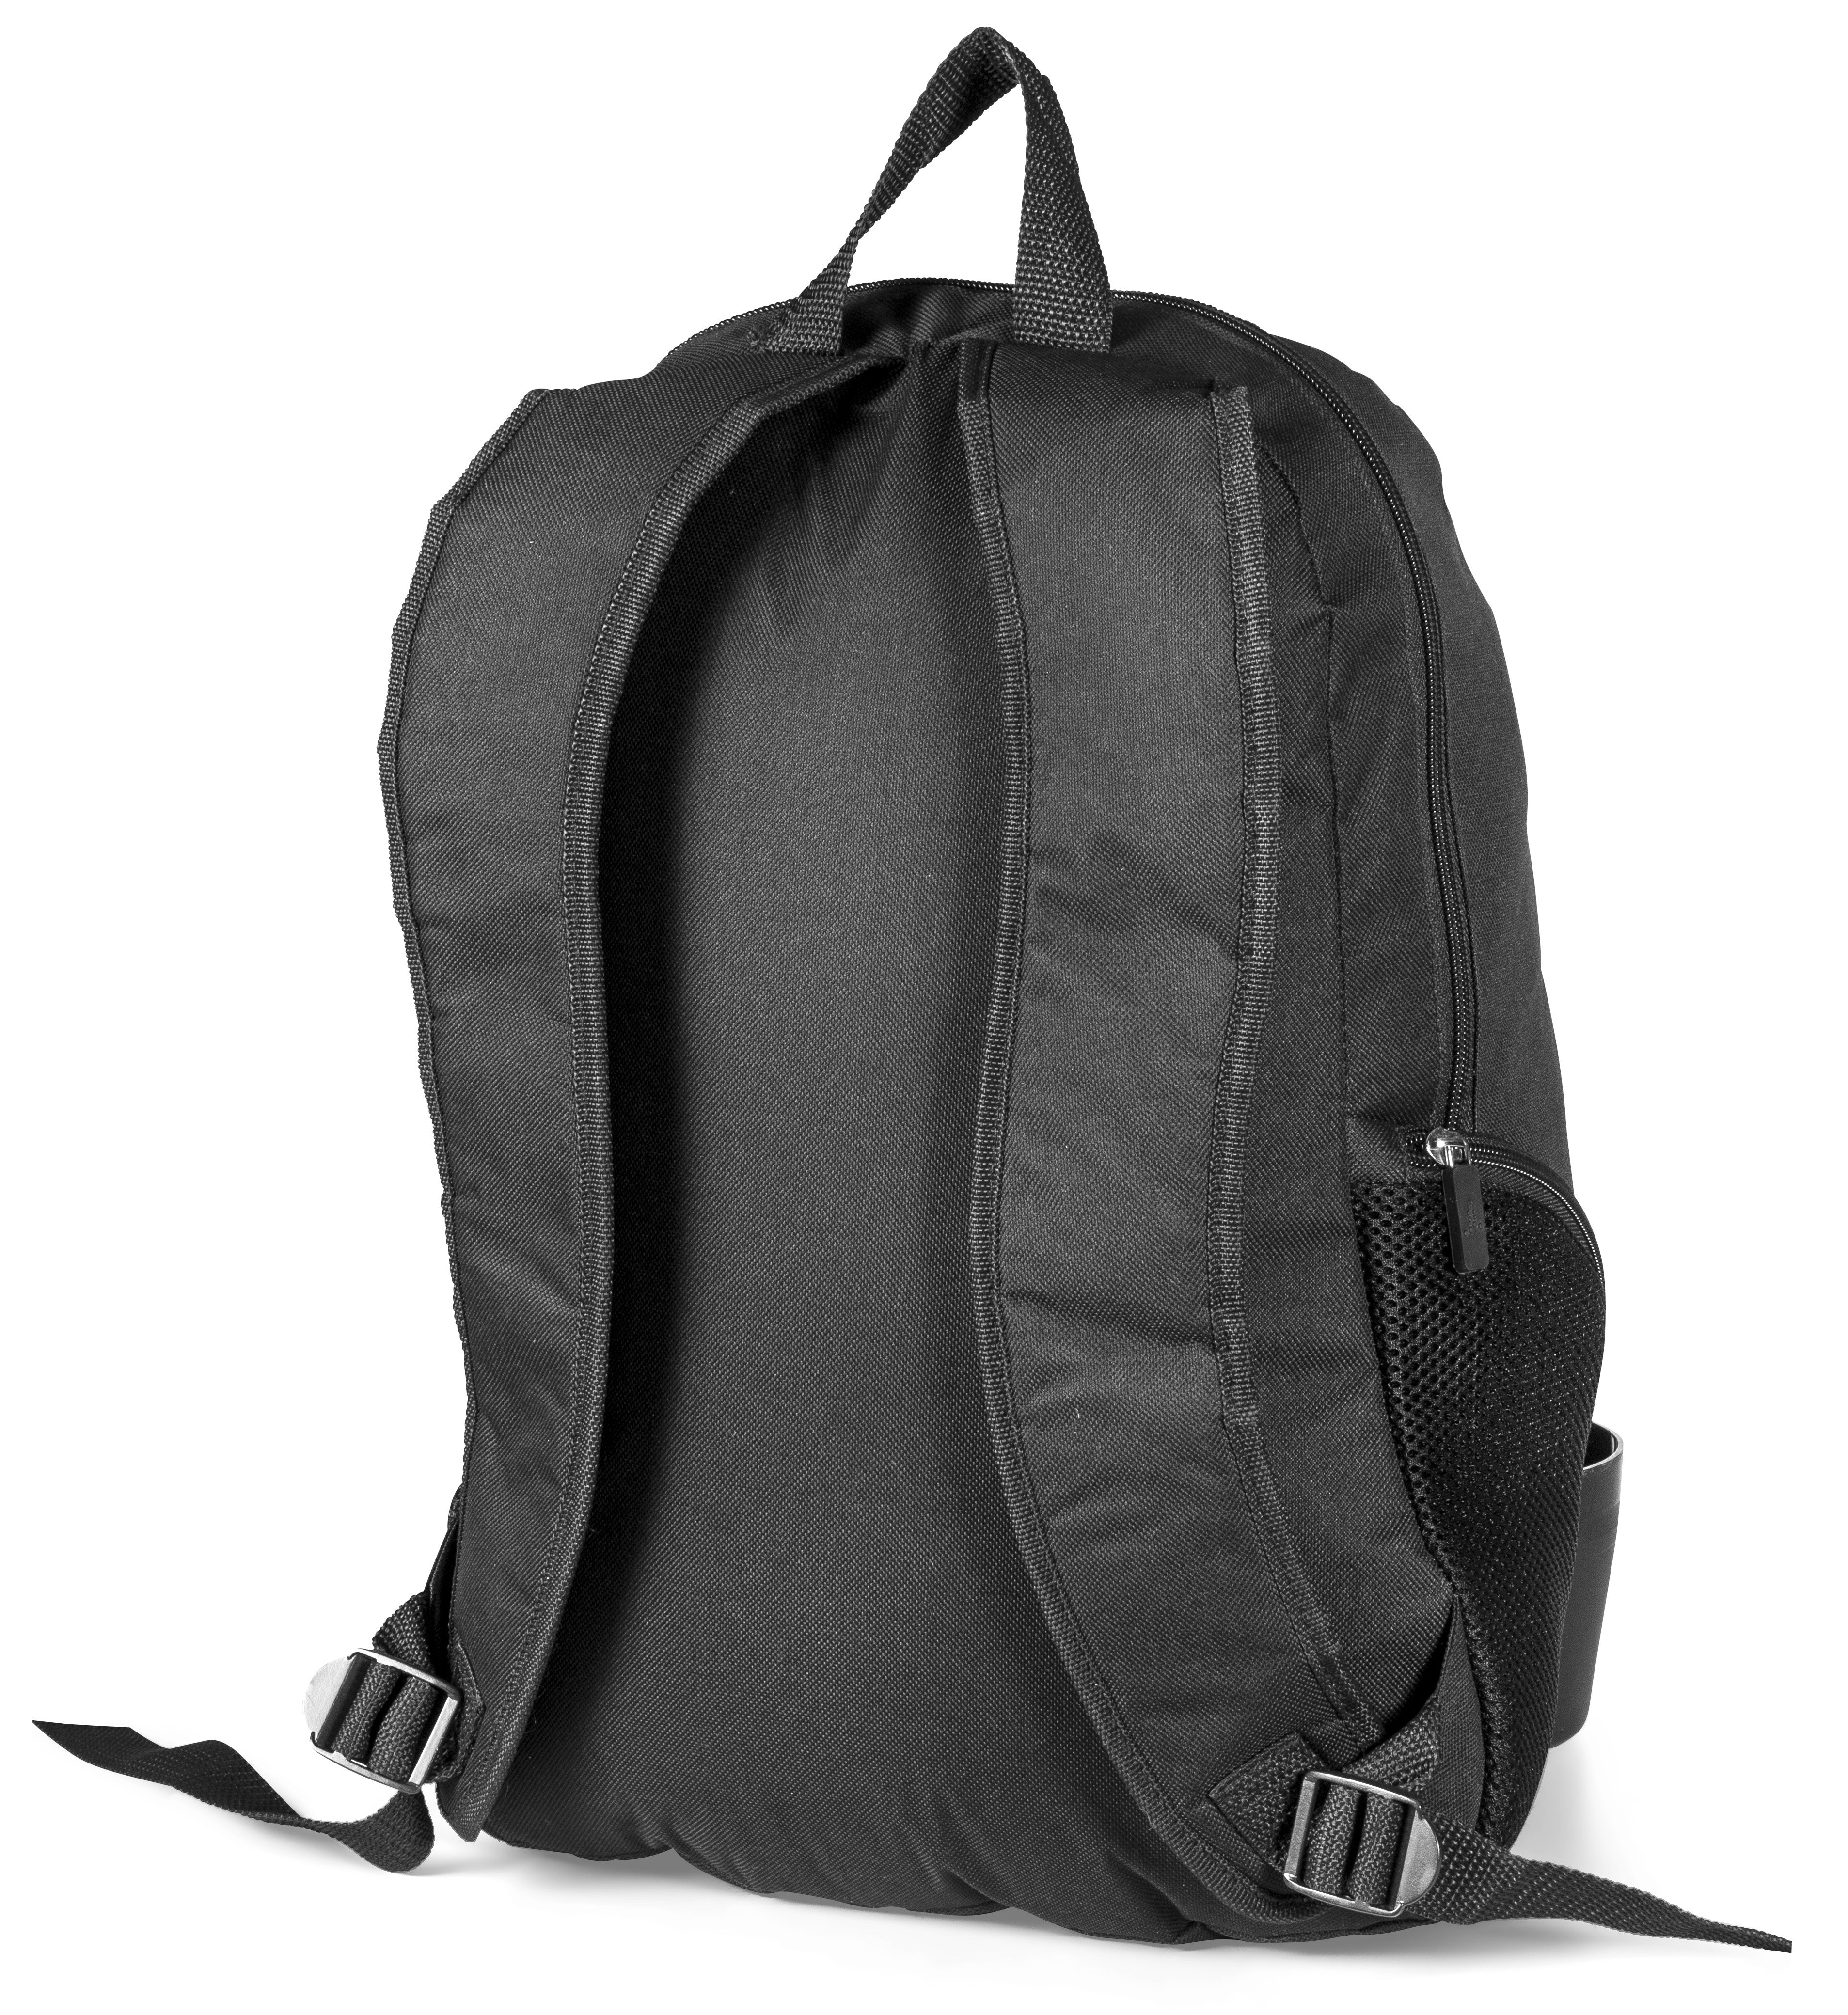 Reno Laptop Backpack